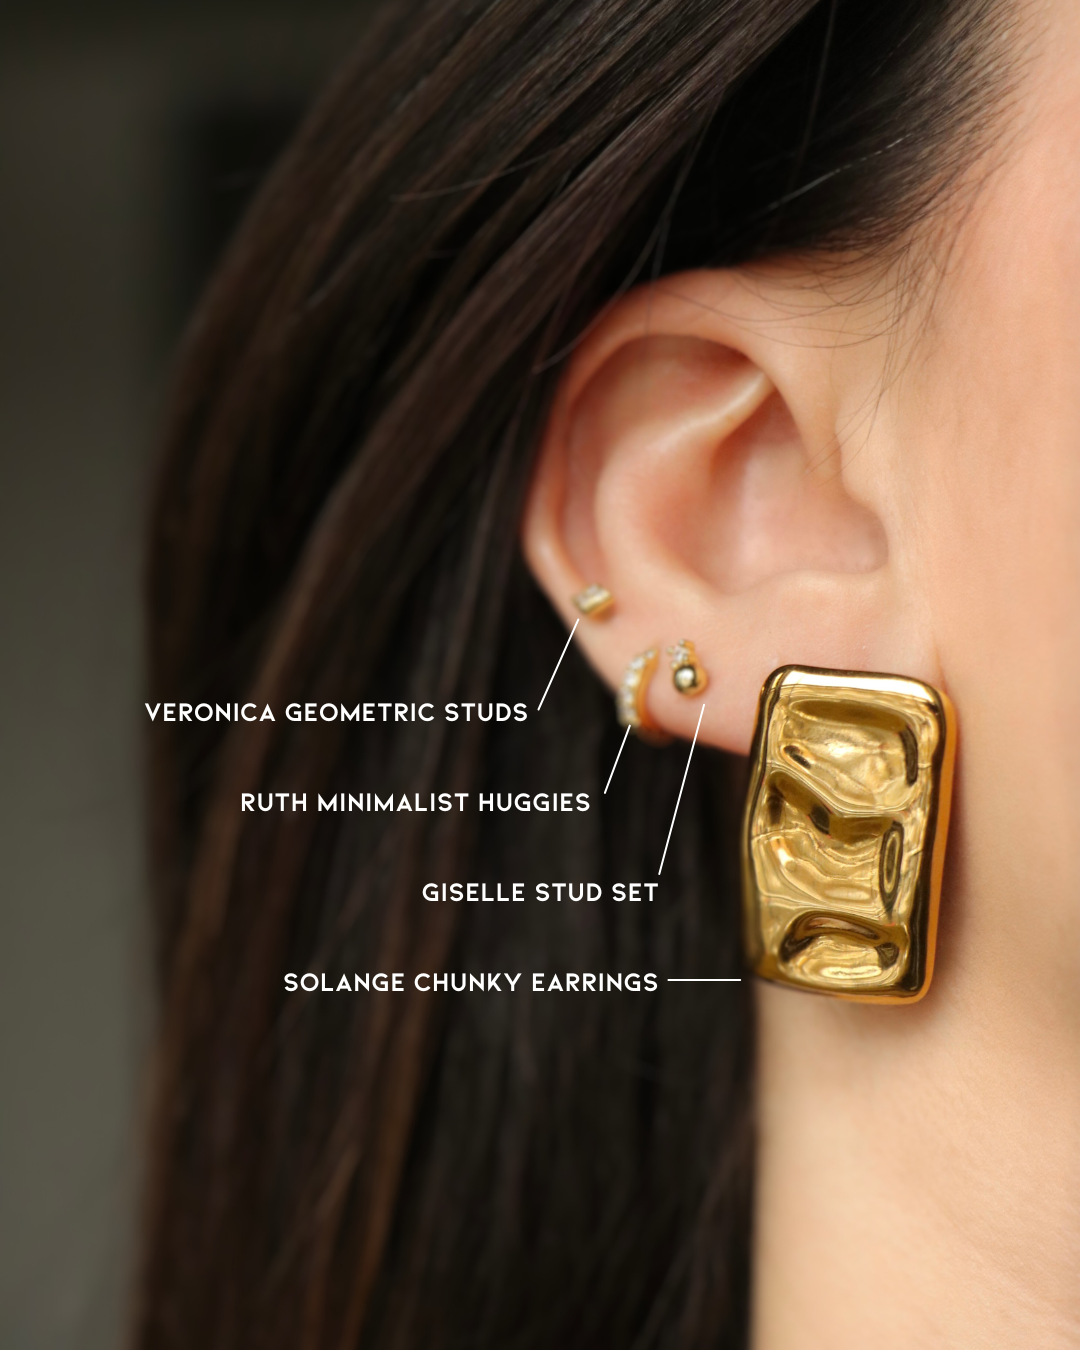 The Solange Chunky Earrings